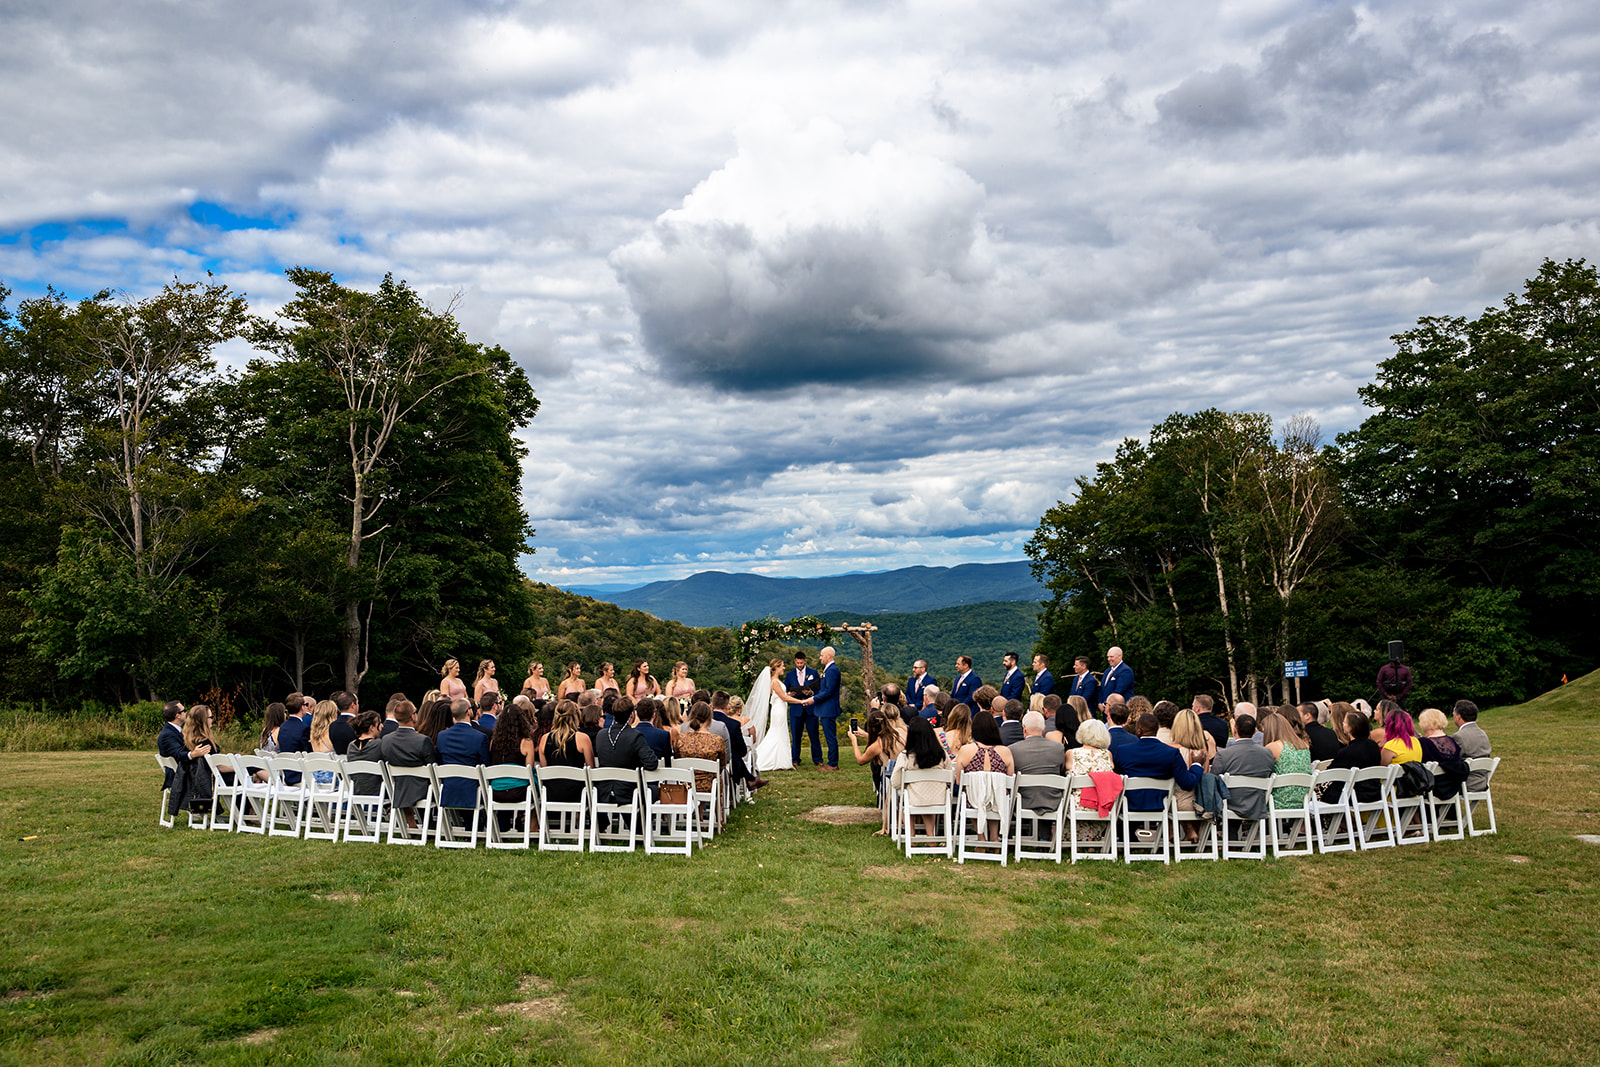 scenic Vermont wedding ceremony location at Sugarbush Resort